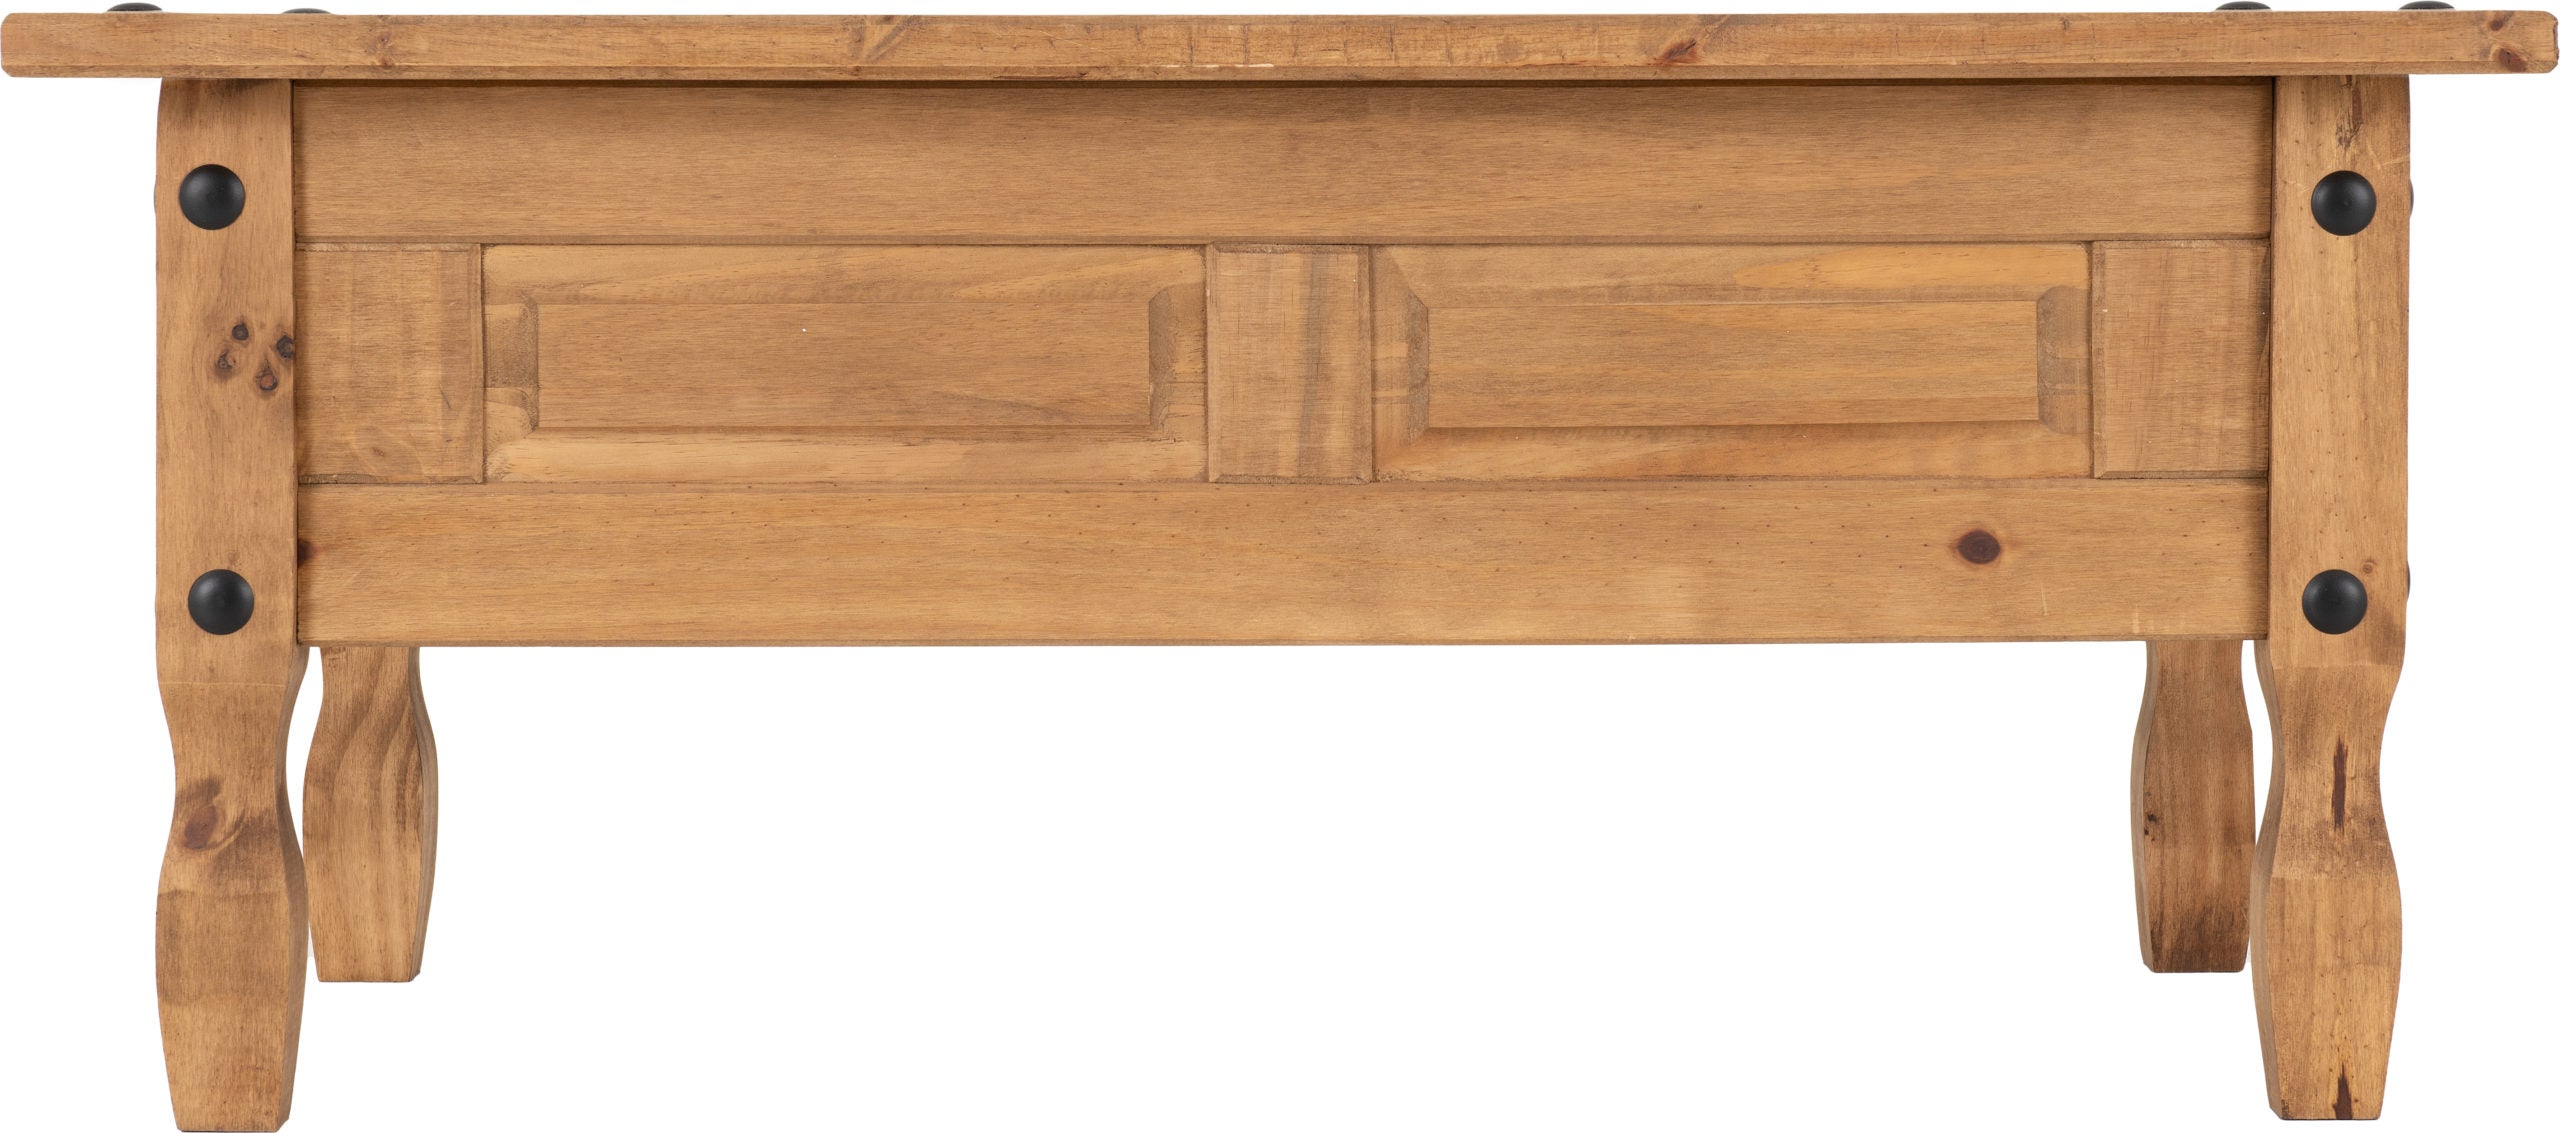 Corona 1 Drawer Coffee Table in Distressed Waxed Pine